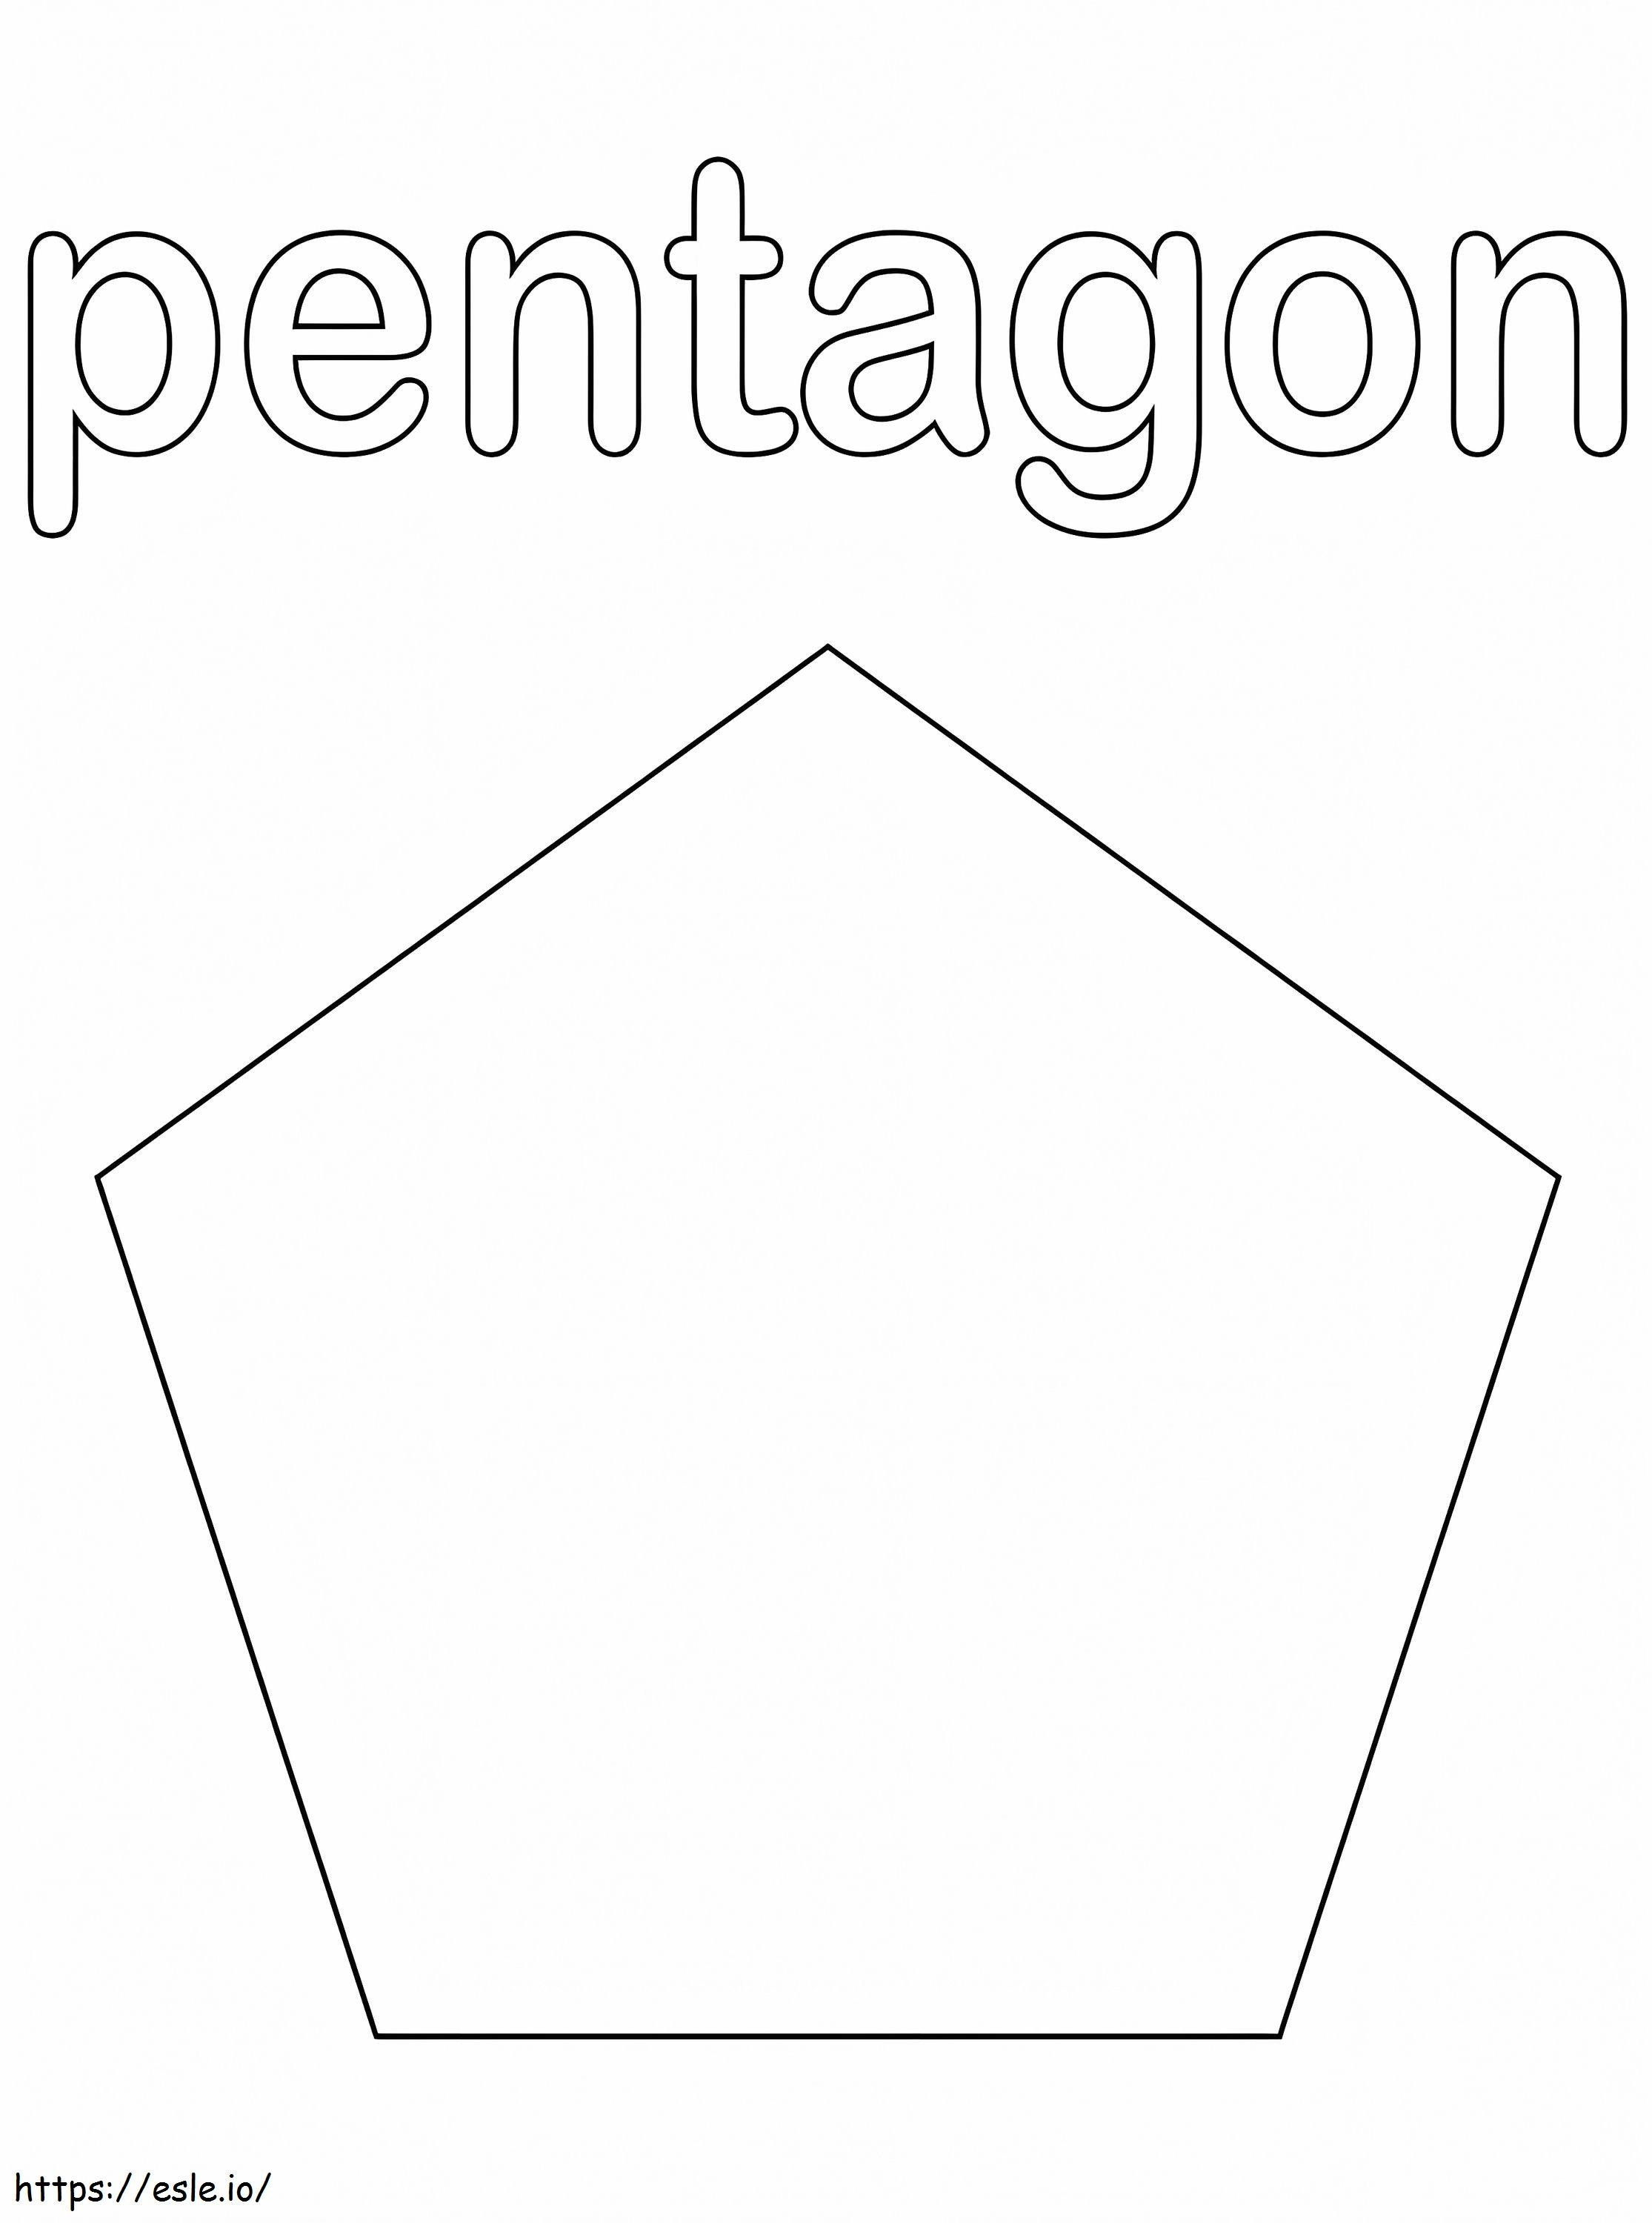 Coloriage Pentagone à imprimer dessin